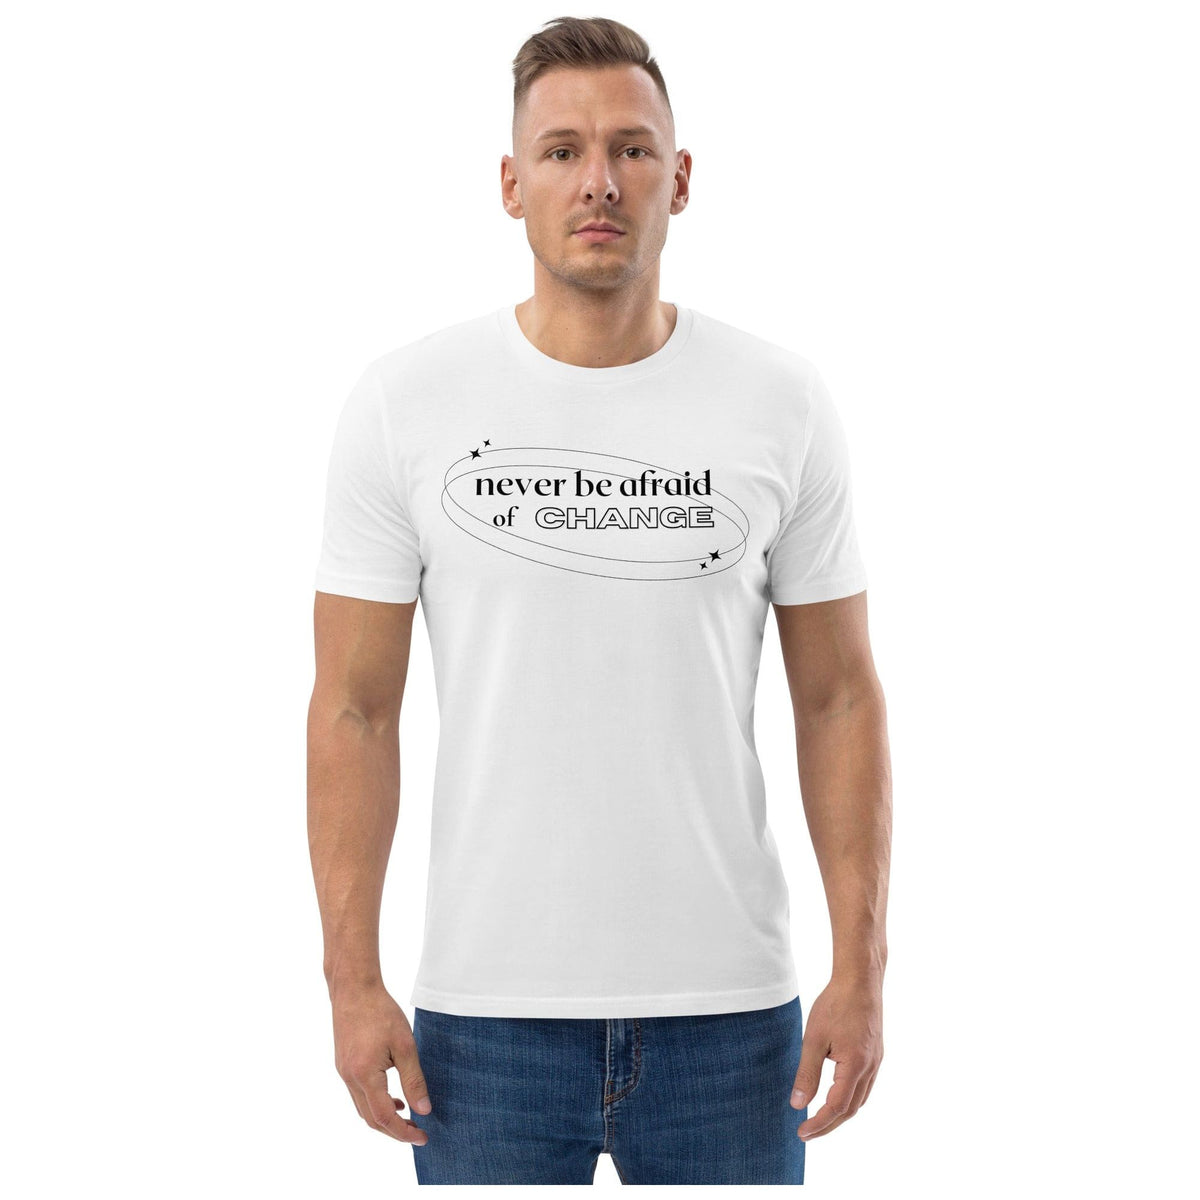 Karma Kiss T Shirt White / S Never Be Afraid of Change - Unisex Organic Cotton T-Shirt